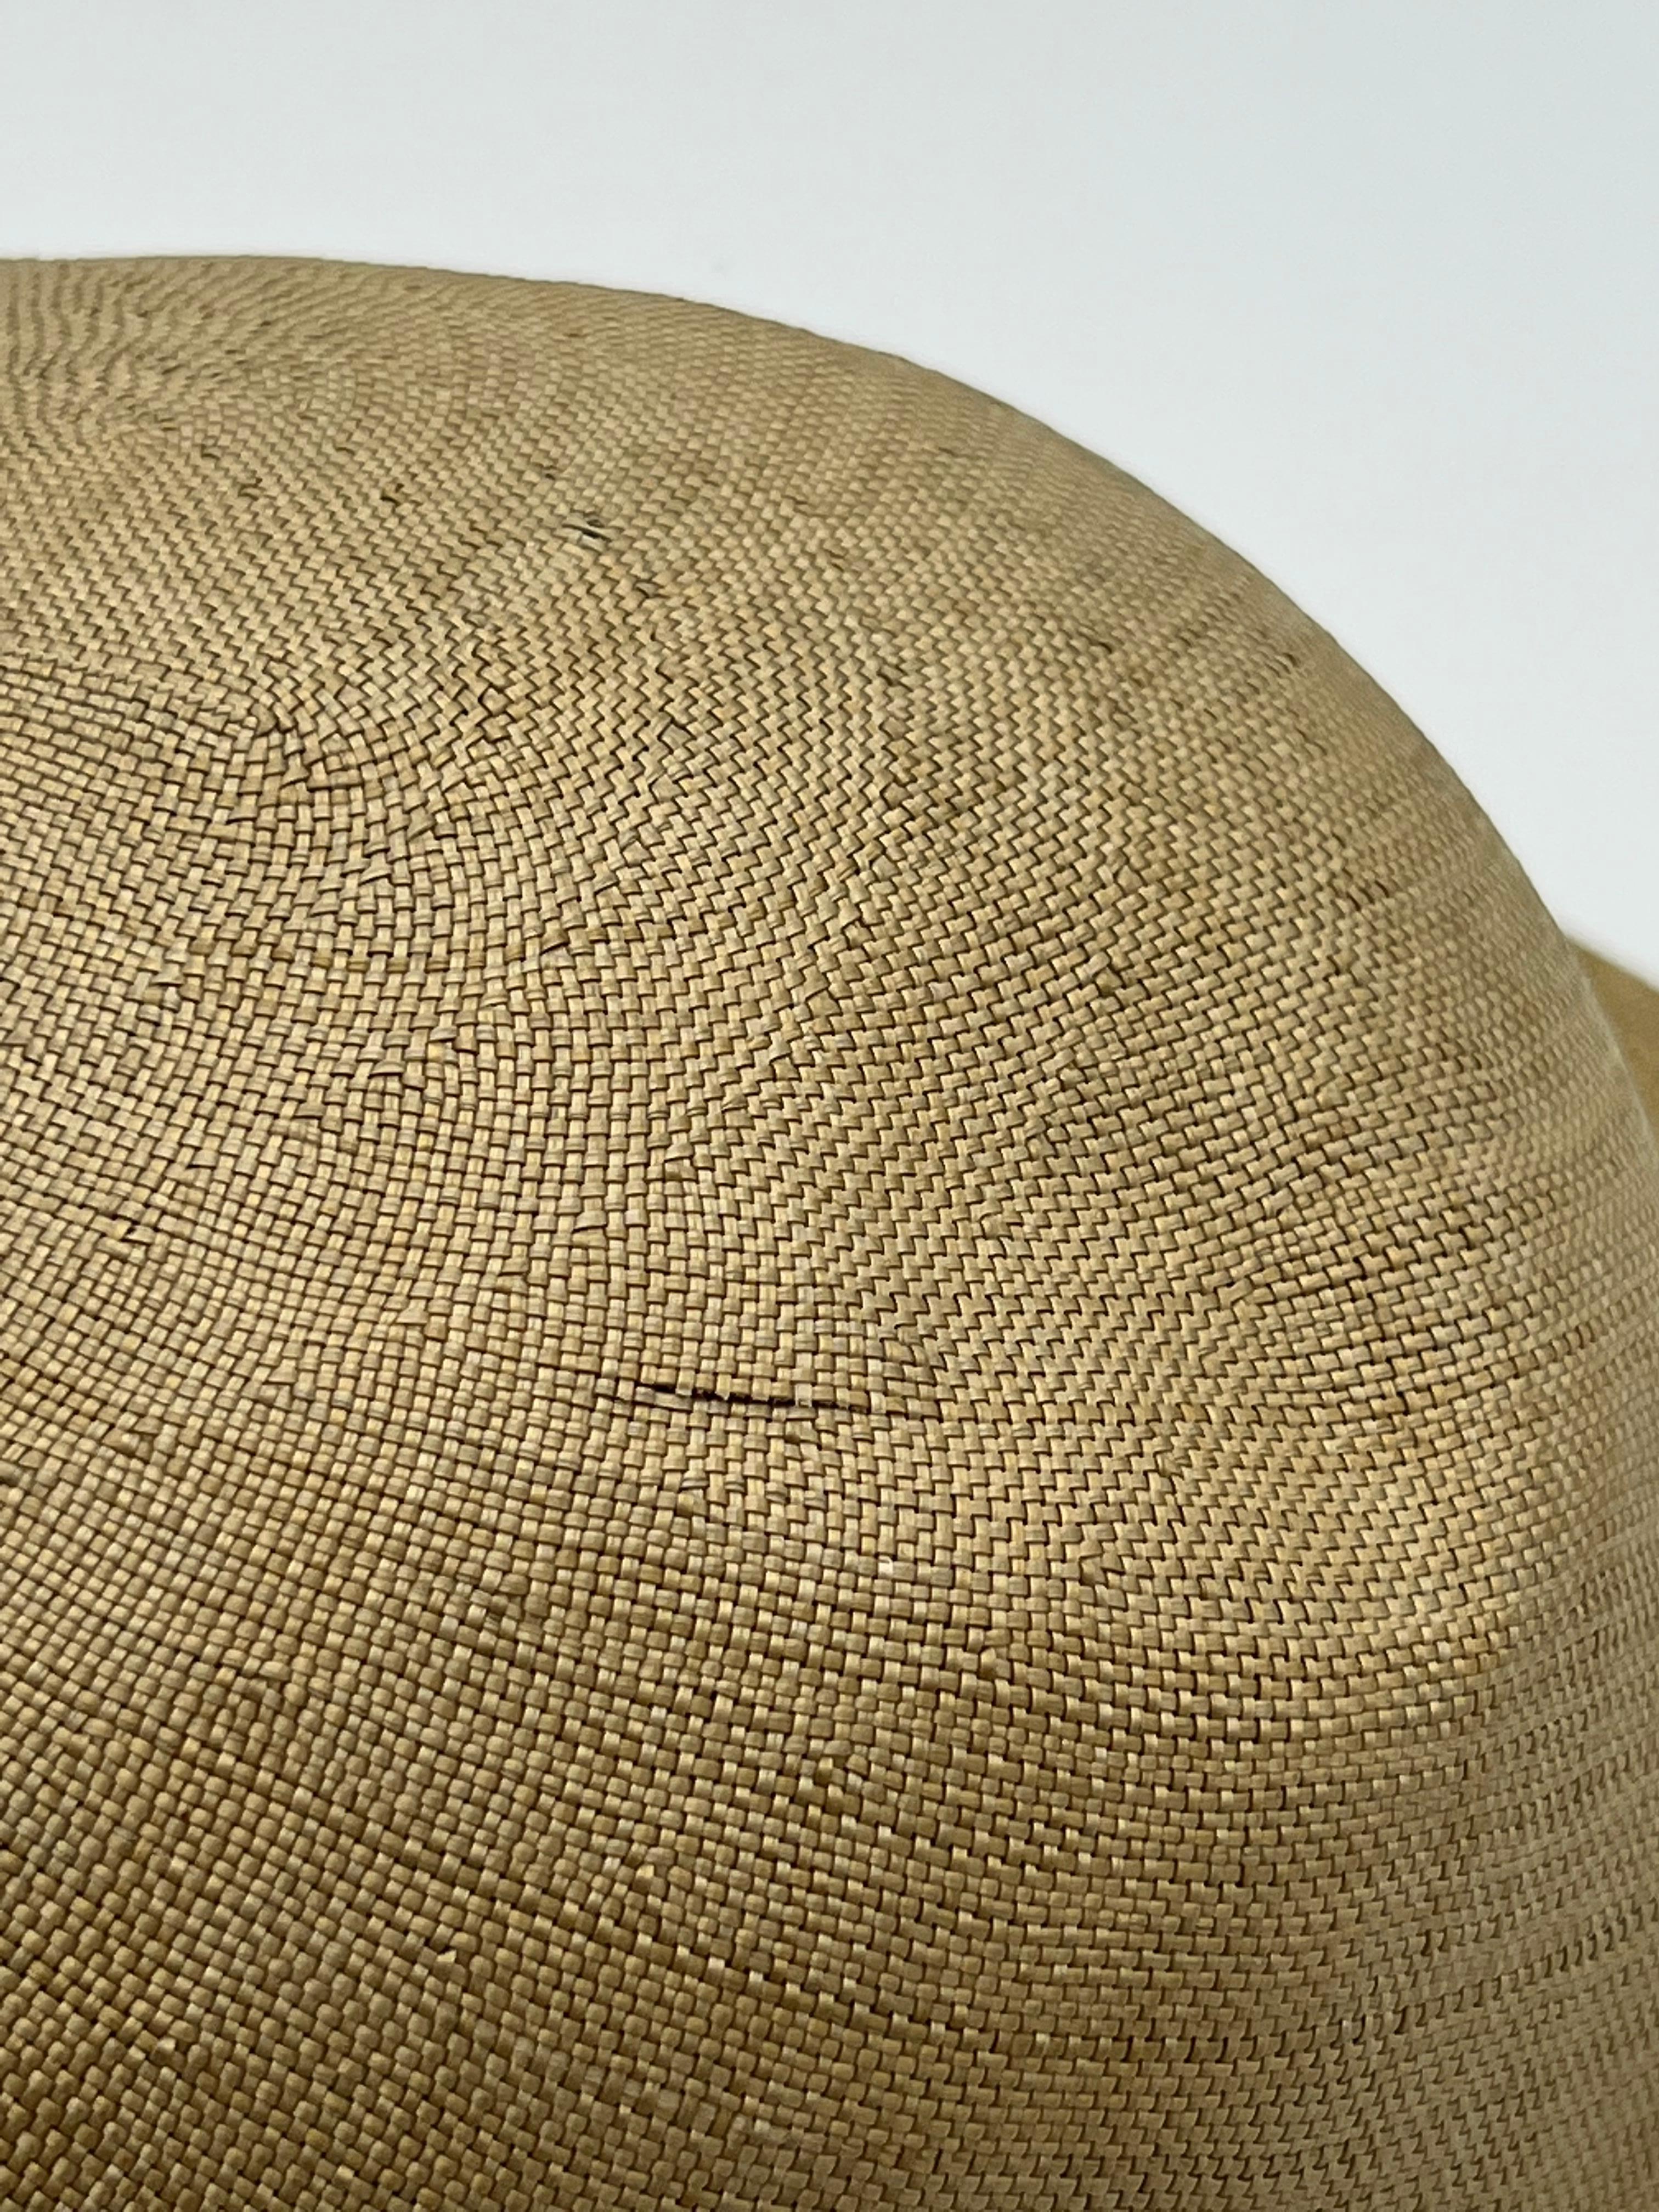 Vintage Yves Saint Laurent Straw Hat For Sale 2